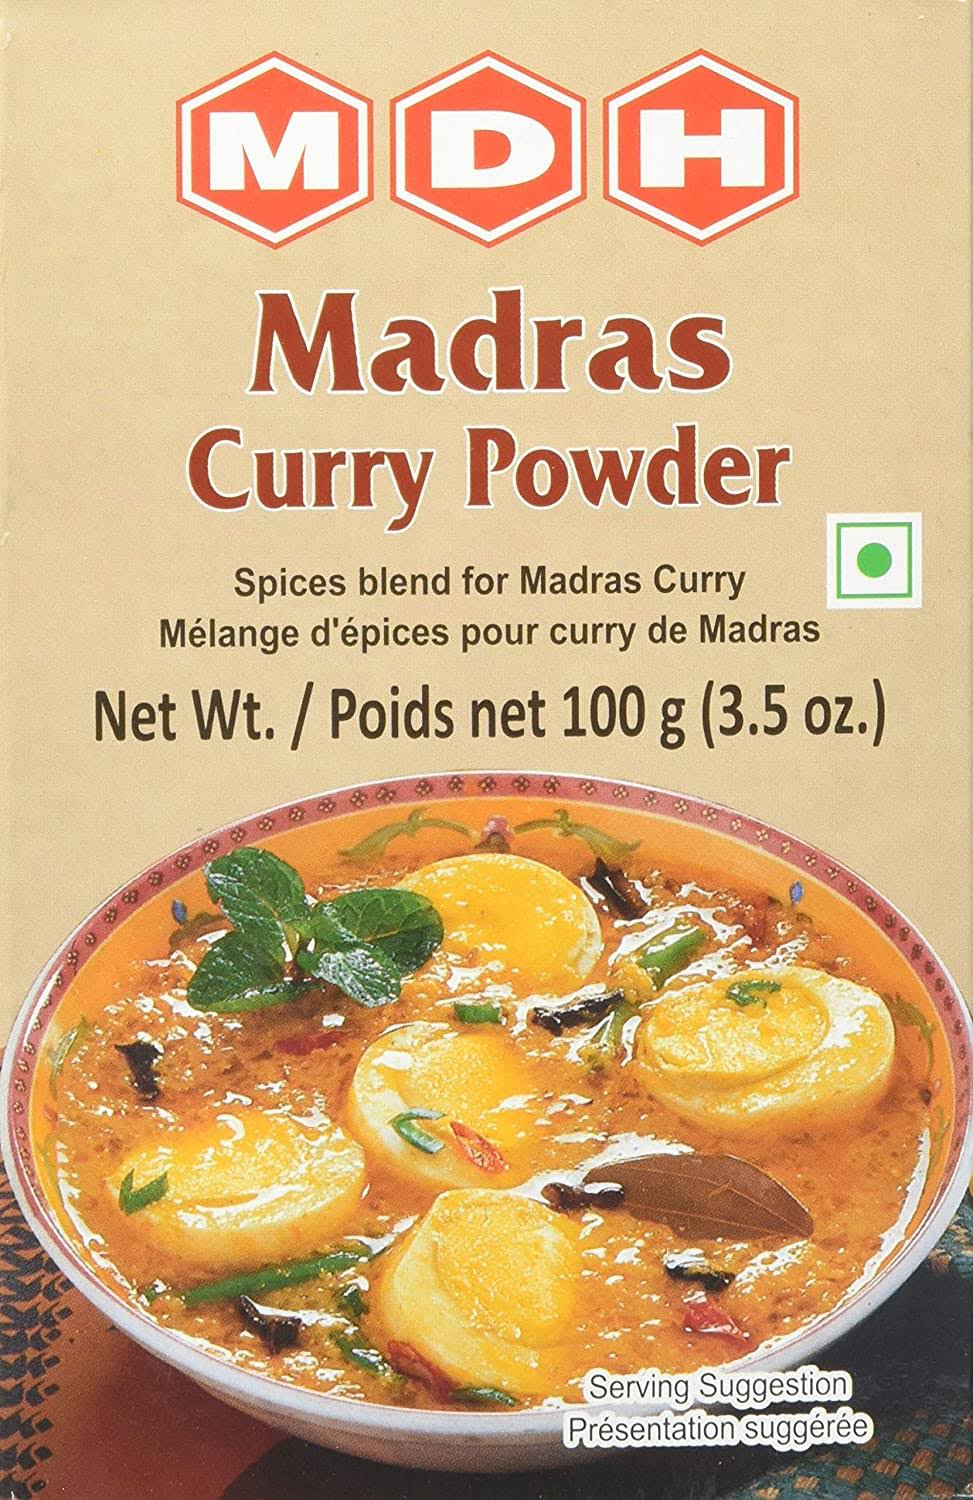 MDH Madras Curry Powder - 100g